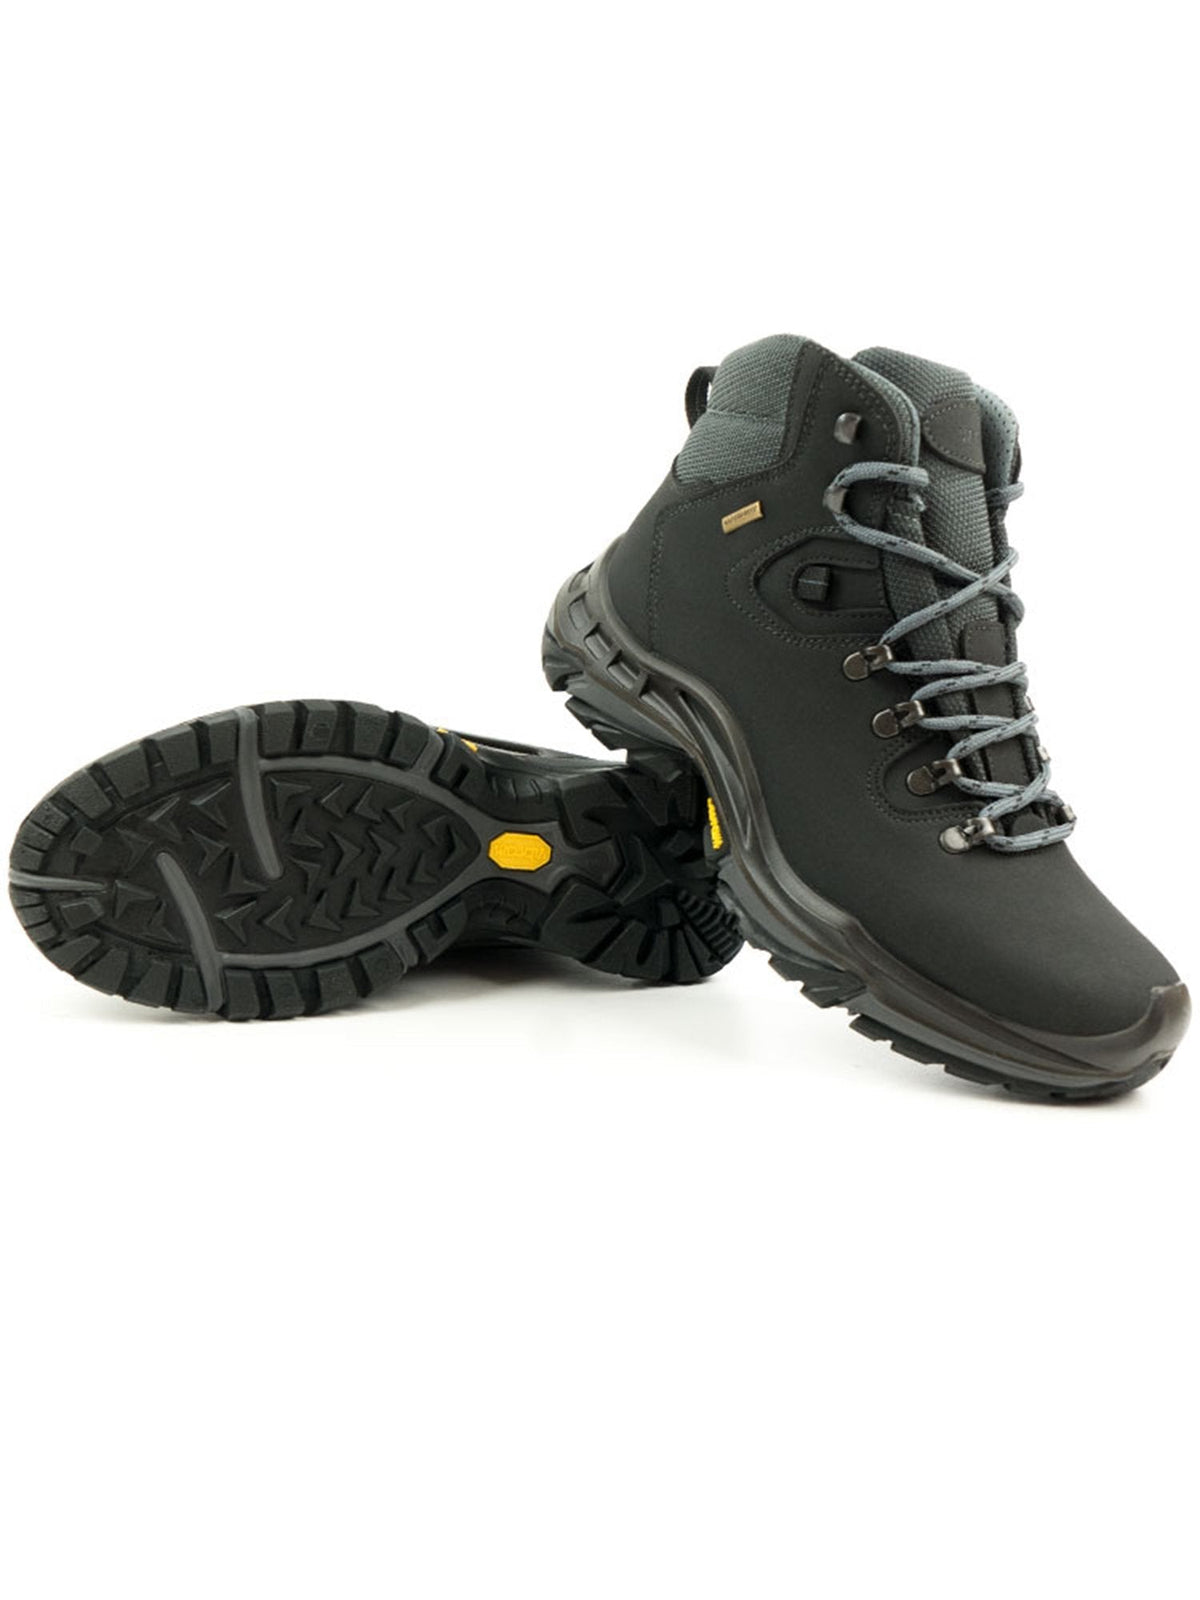 WVSport Waterproof Hiking Boots | Men